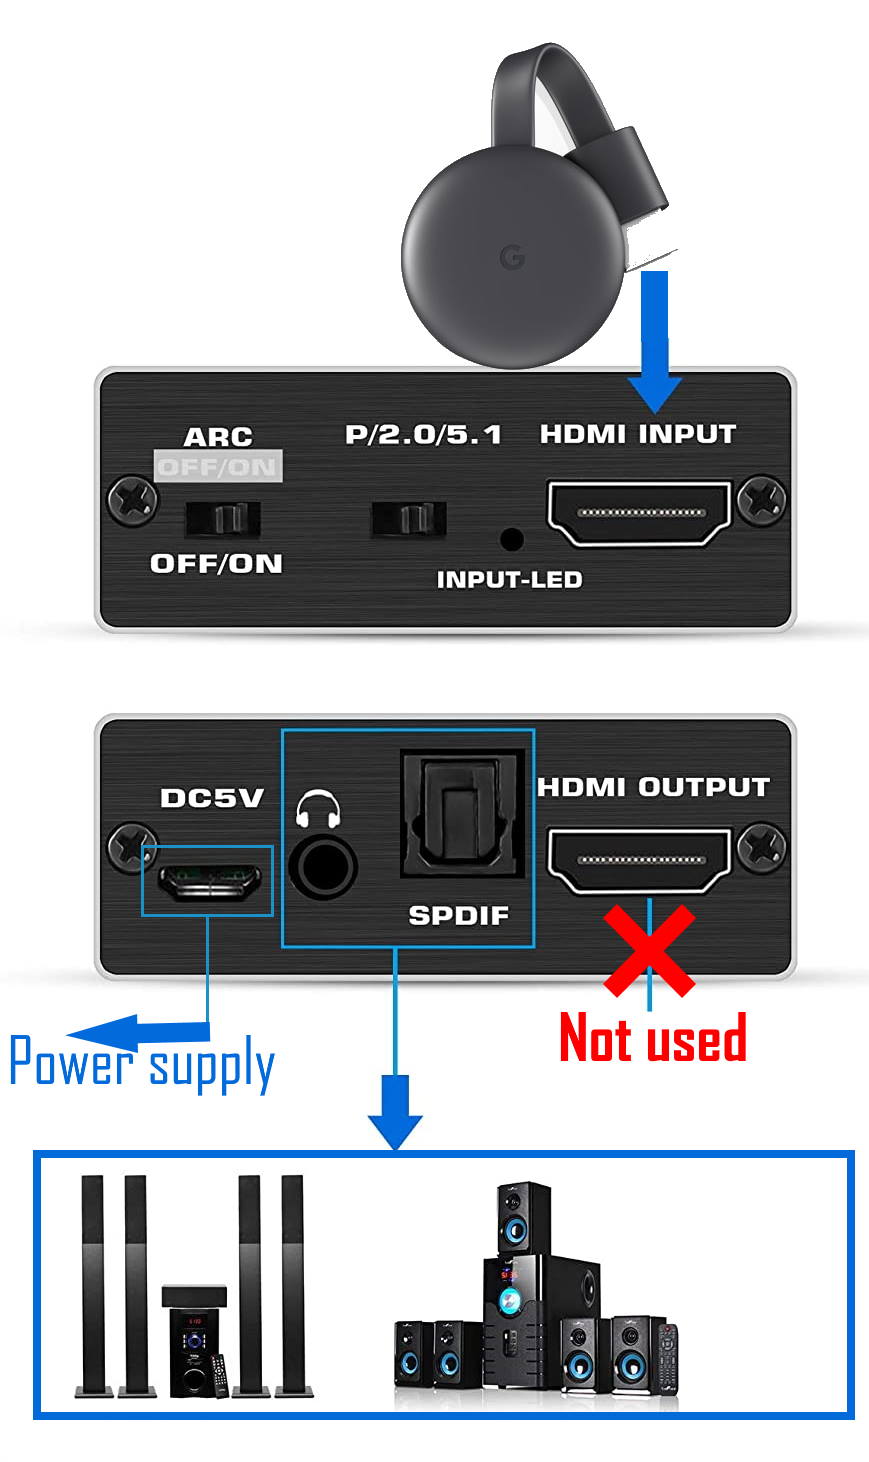 How to use Chromecast to stream music to dumb speakers Chromecast does)? - All Chromecast